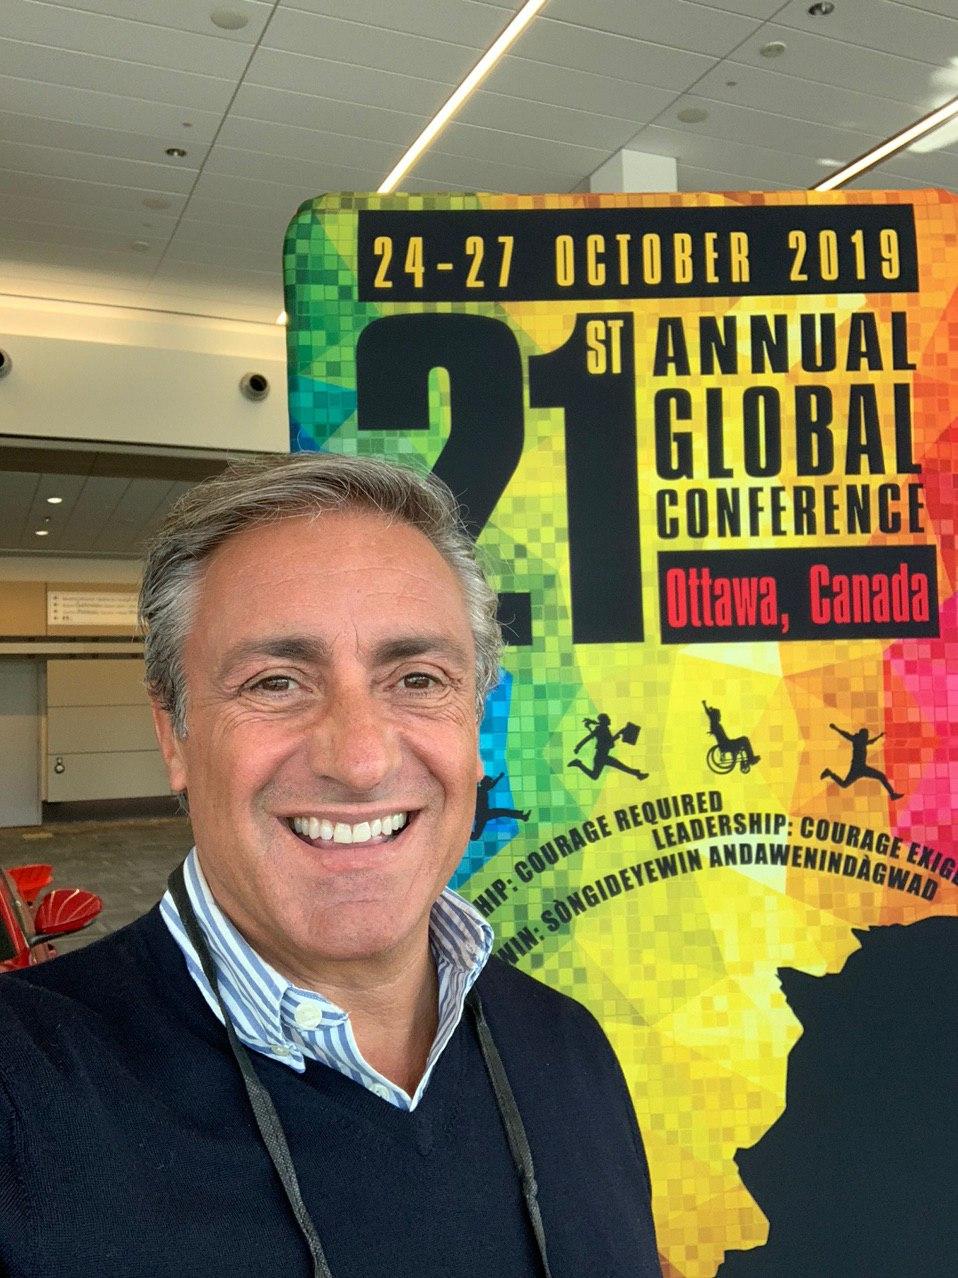 Congreso de la Asociación internacional de liderazgo - Ottawa Canadá